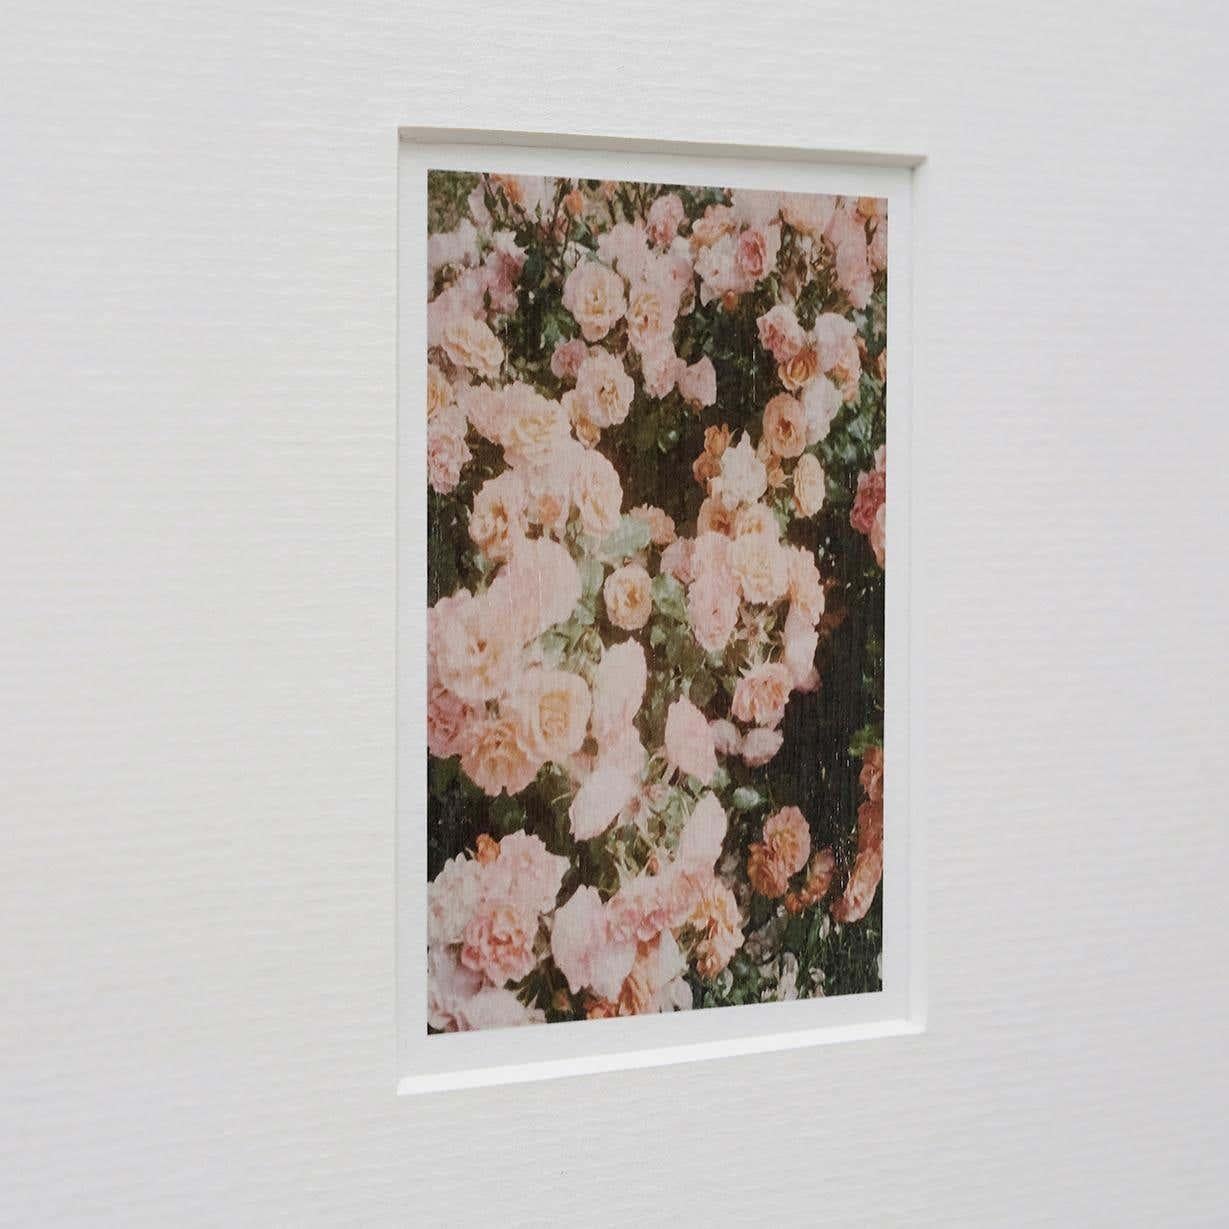 David Urbano Contemporary Photography the Rose Garden Nº 40 For Sale 1